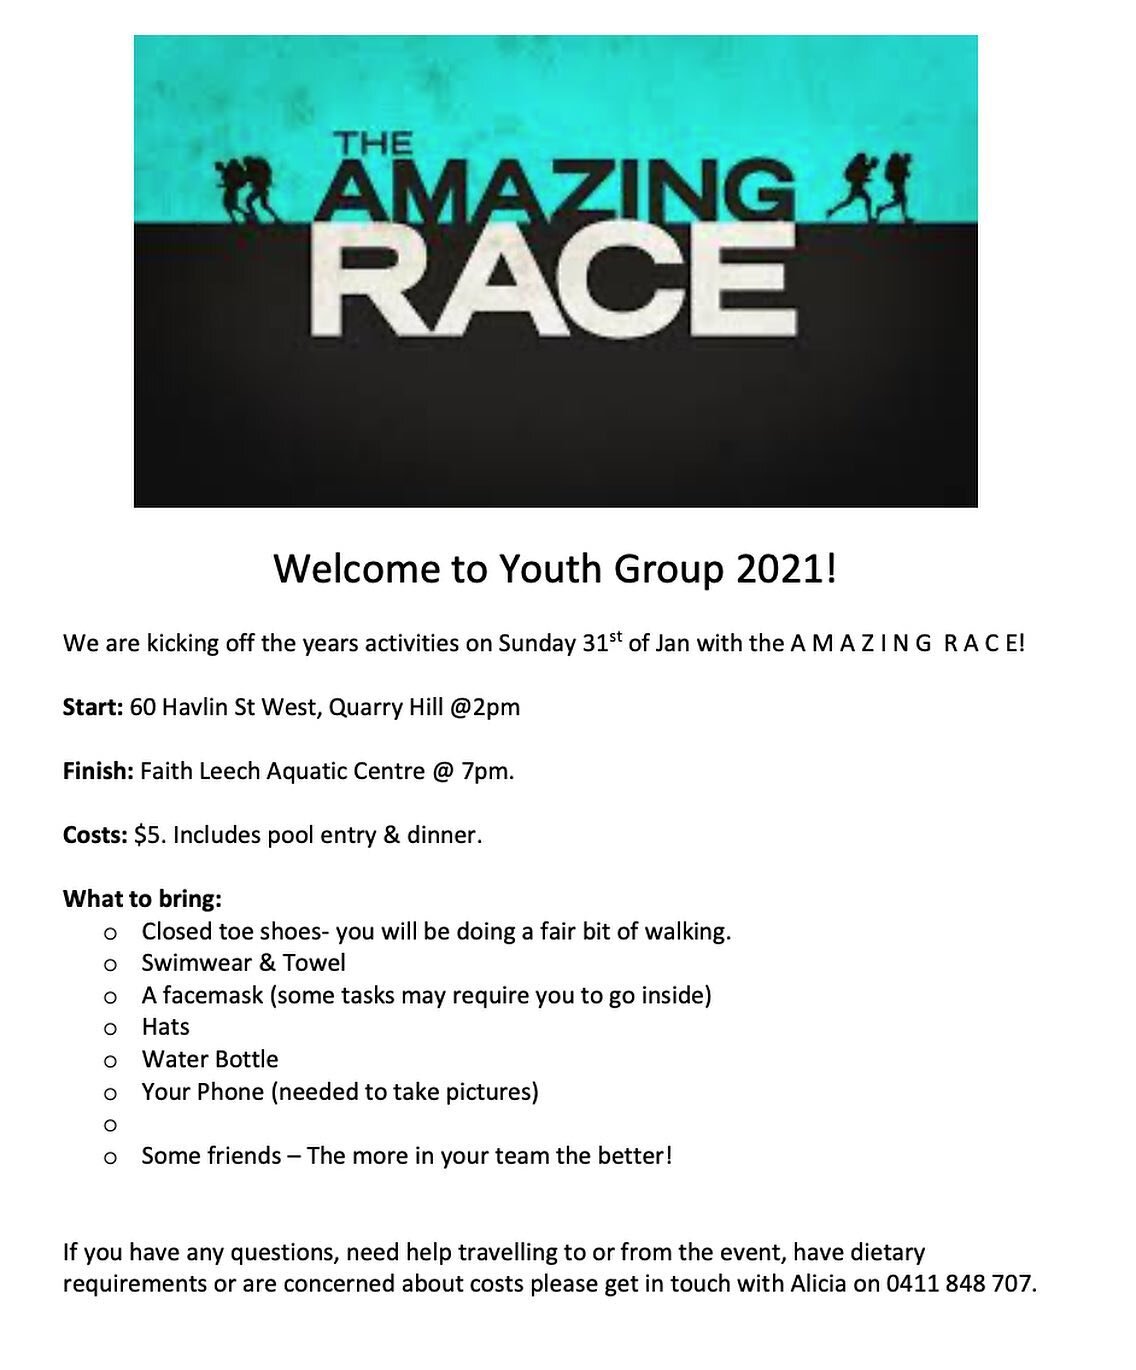 B E N D I G O YOUTH
Ready for this epic battle of the teams?
Get your team together for the amazing race 🏃 🏊 🚴 
#youth #youthgroup #amazing #race #amazingrace #bendigo #mycplus #battle #swim #bbq